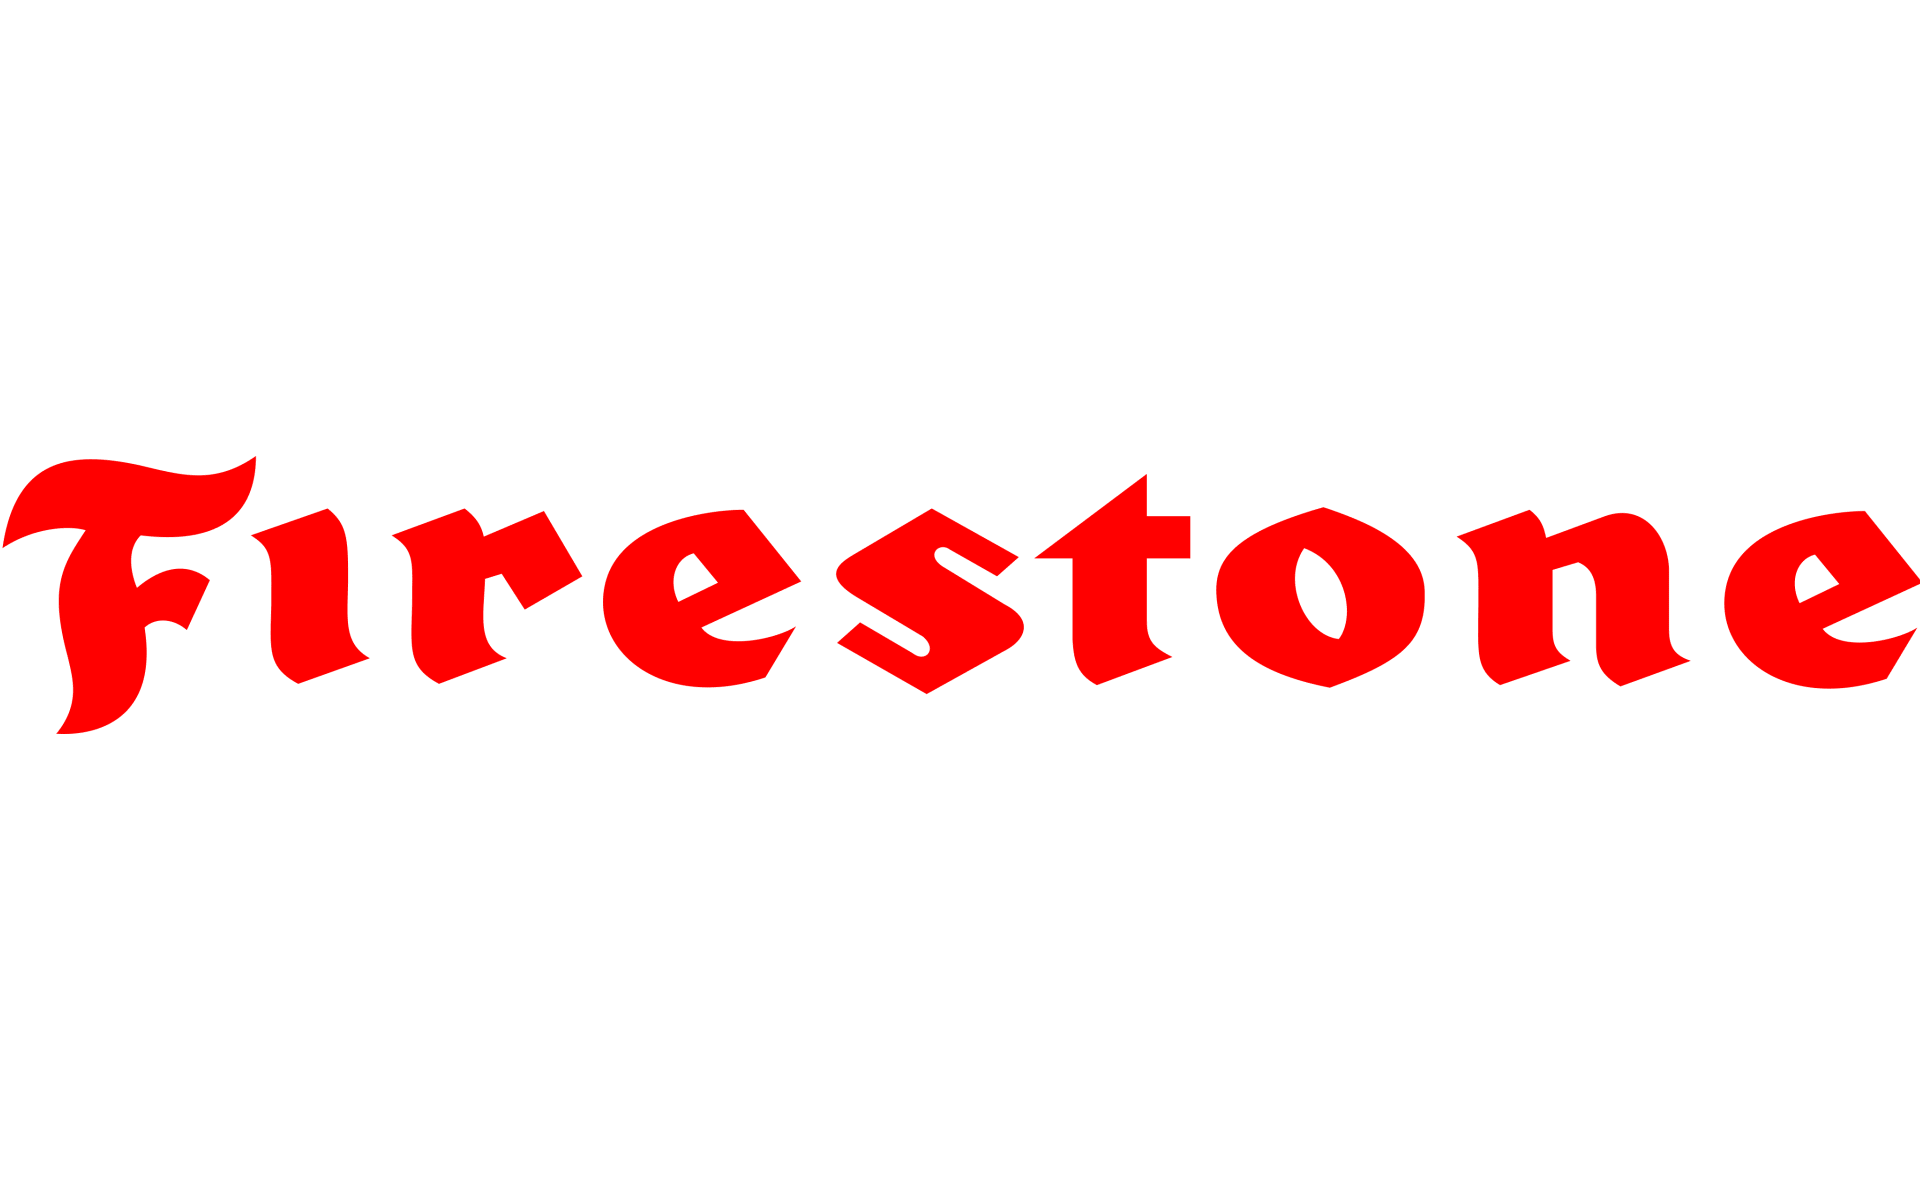 Firestone-logo